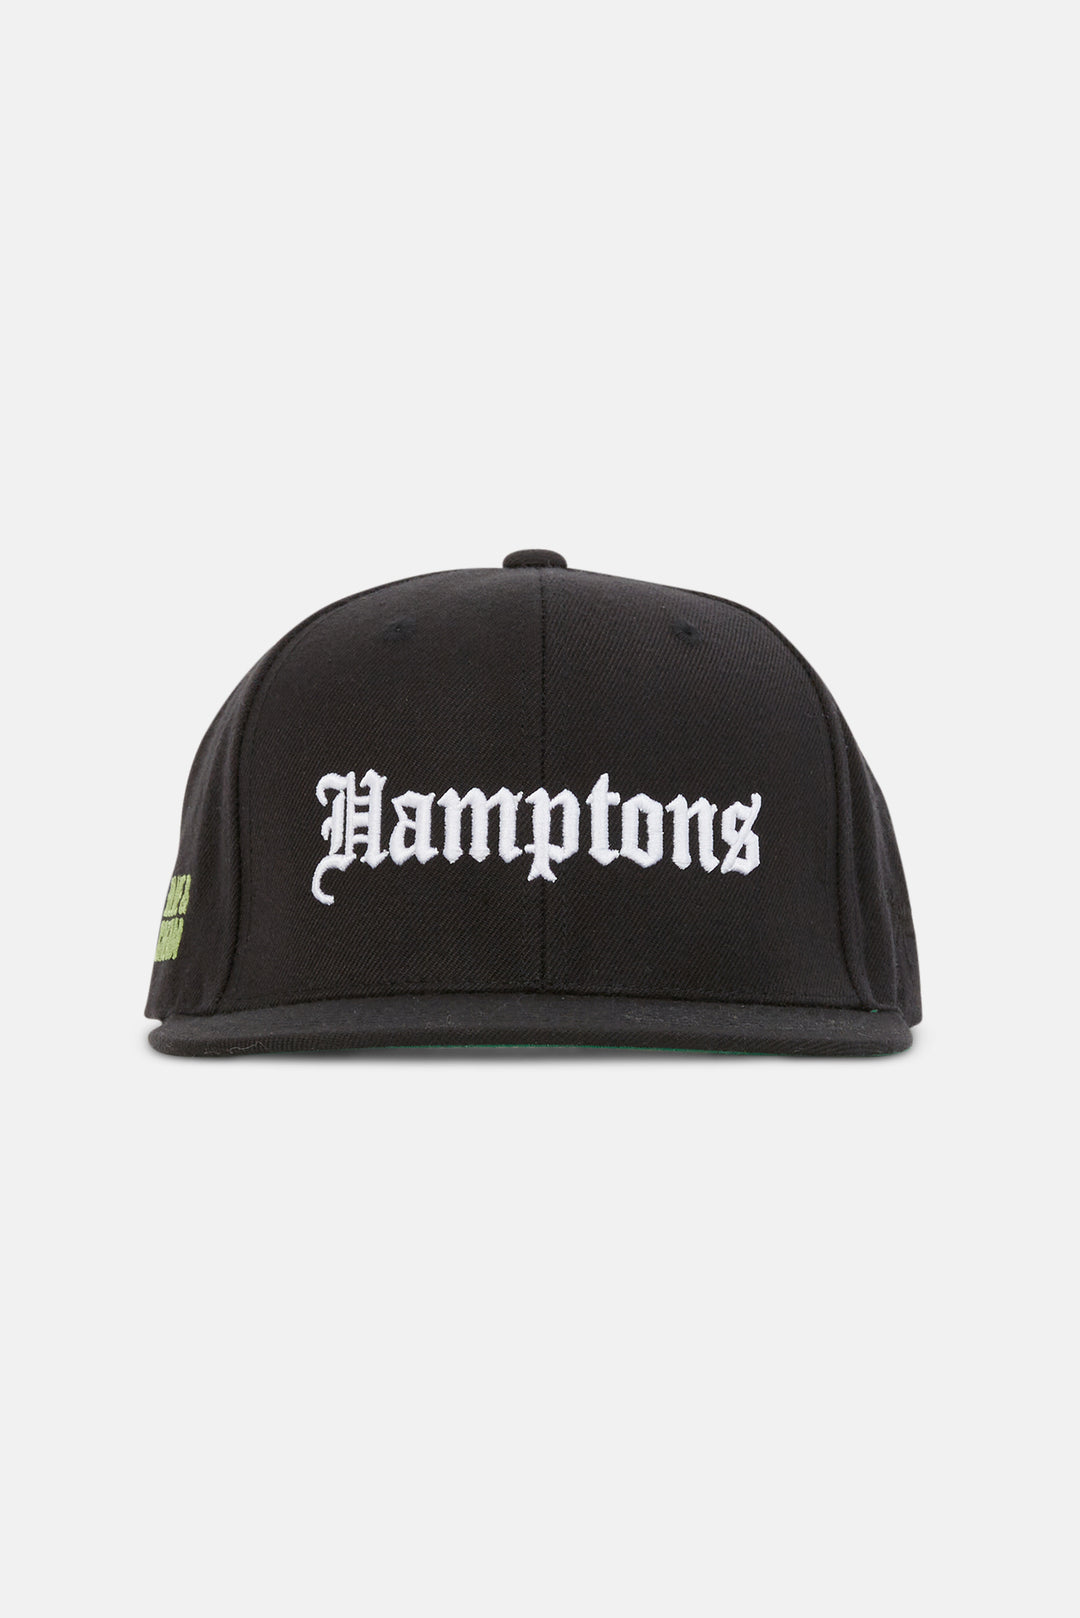 x SSUR Hamptons Snapback Black - blueandcream